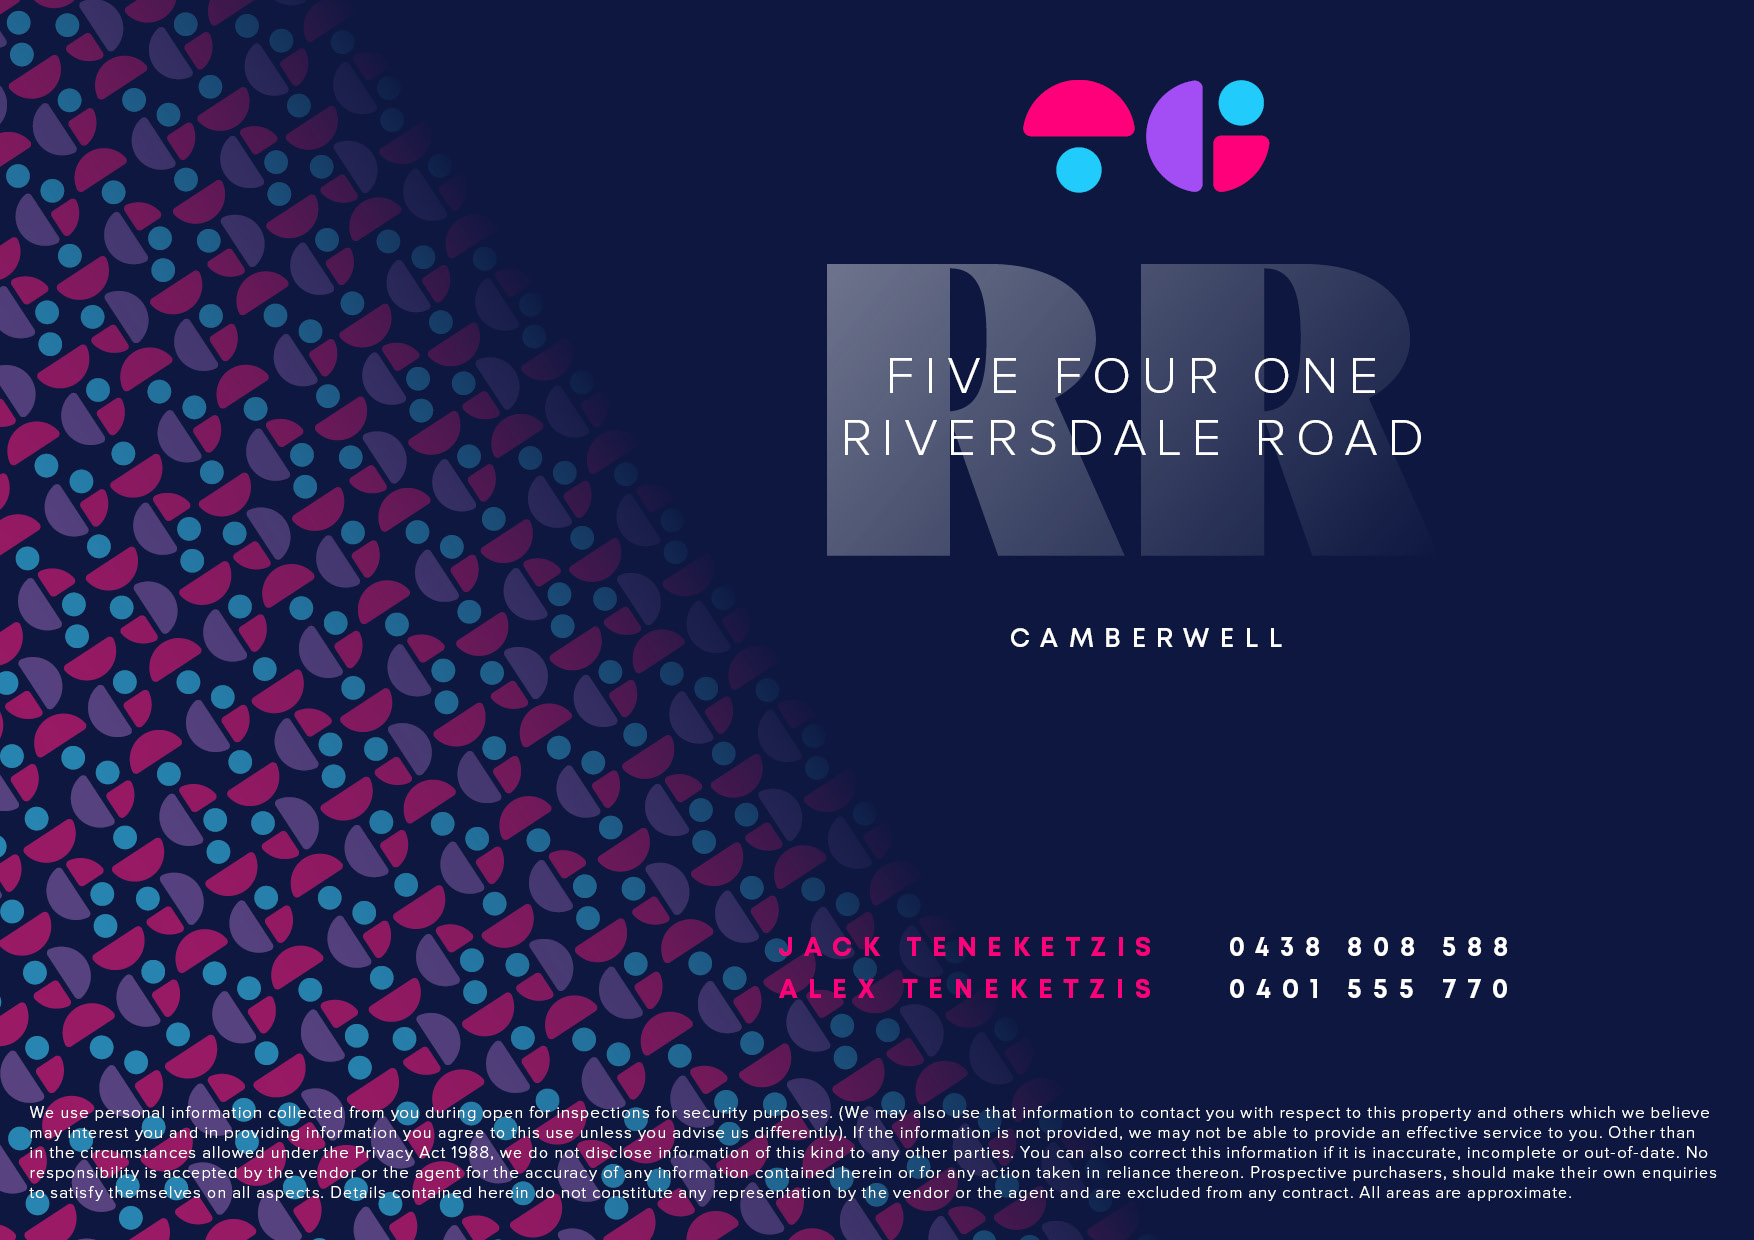 Sale 541 Riversdale Road Camberwell Real Estate Camberwell Retail Camberwell Investment Commercial Real Estate TCI